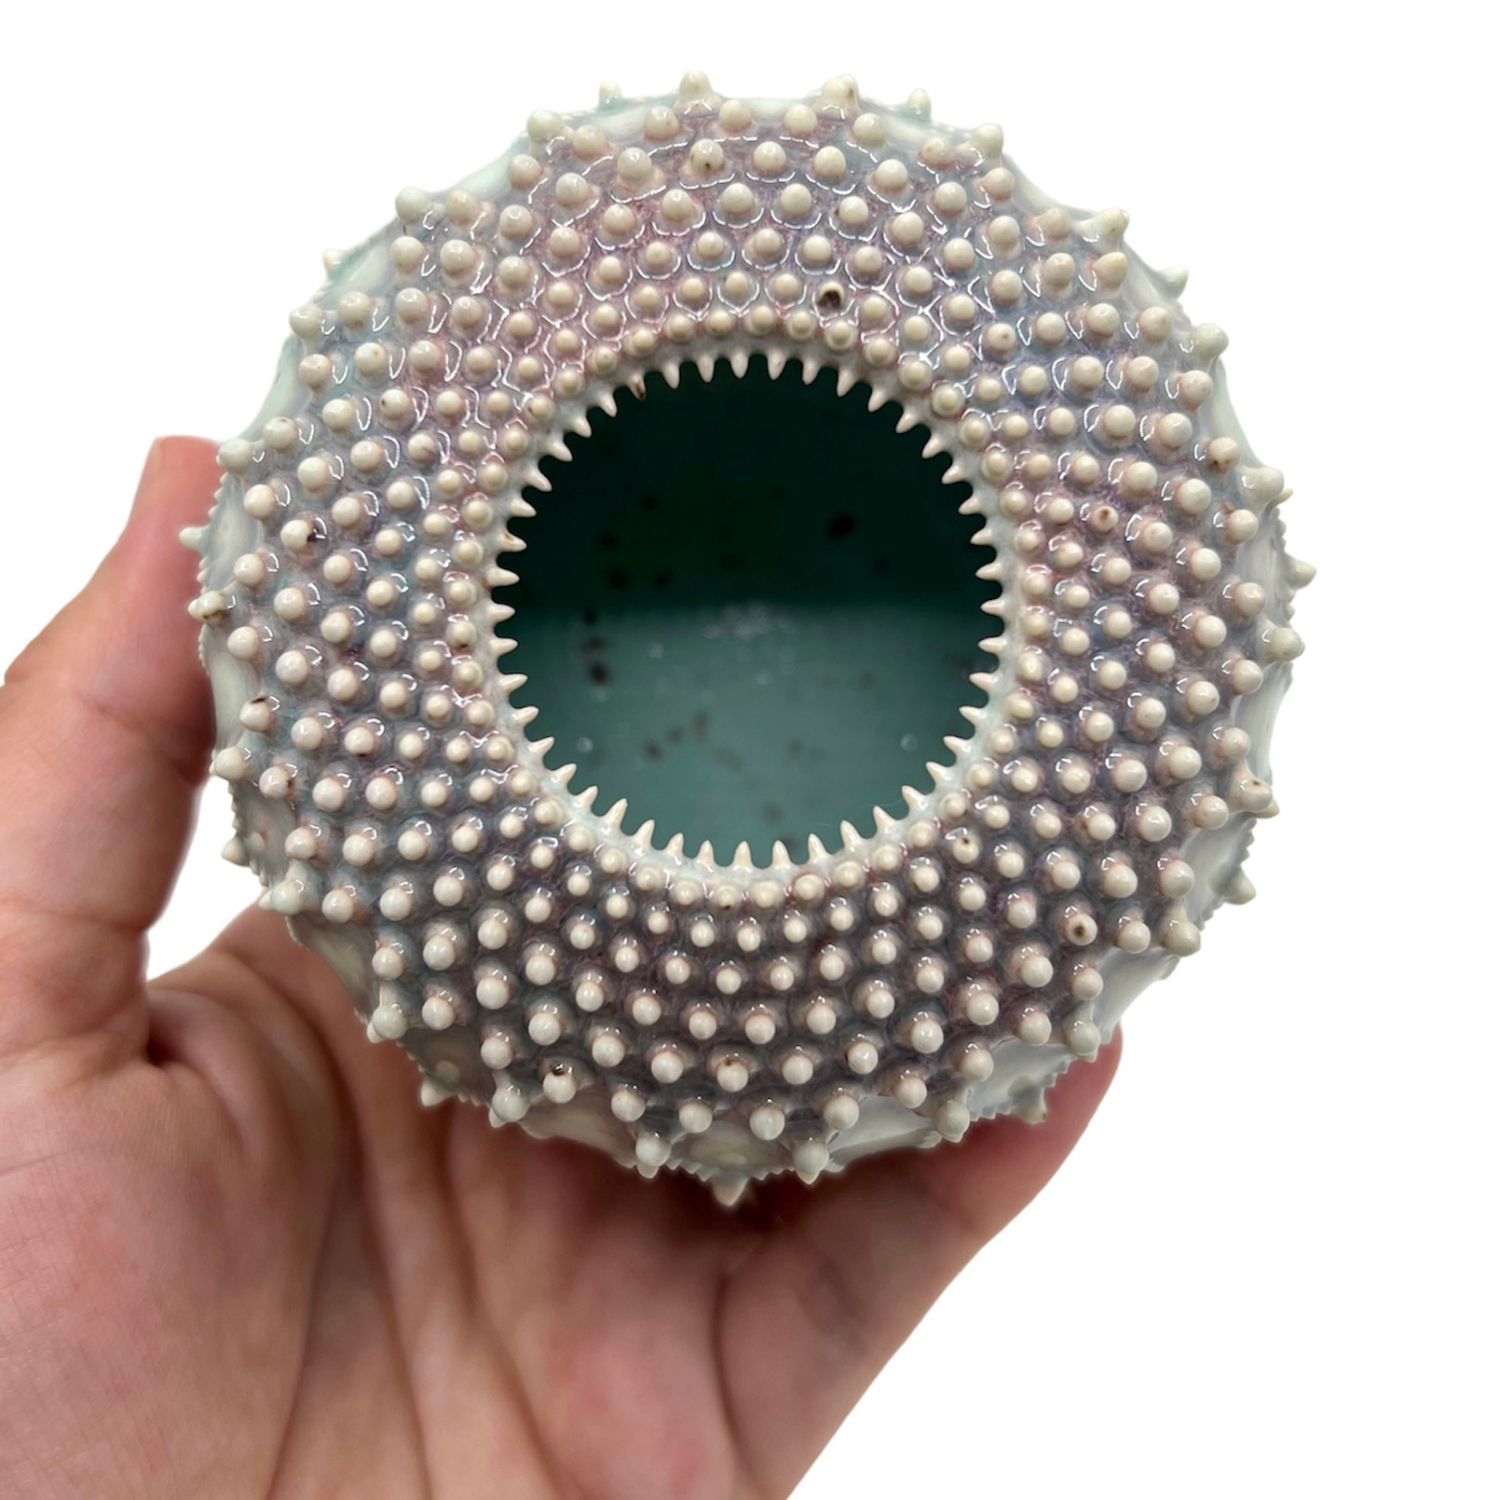 Zara Gardner: Turquoise Urchin Sculpture Product Image 5 of 5